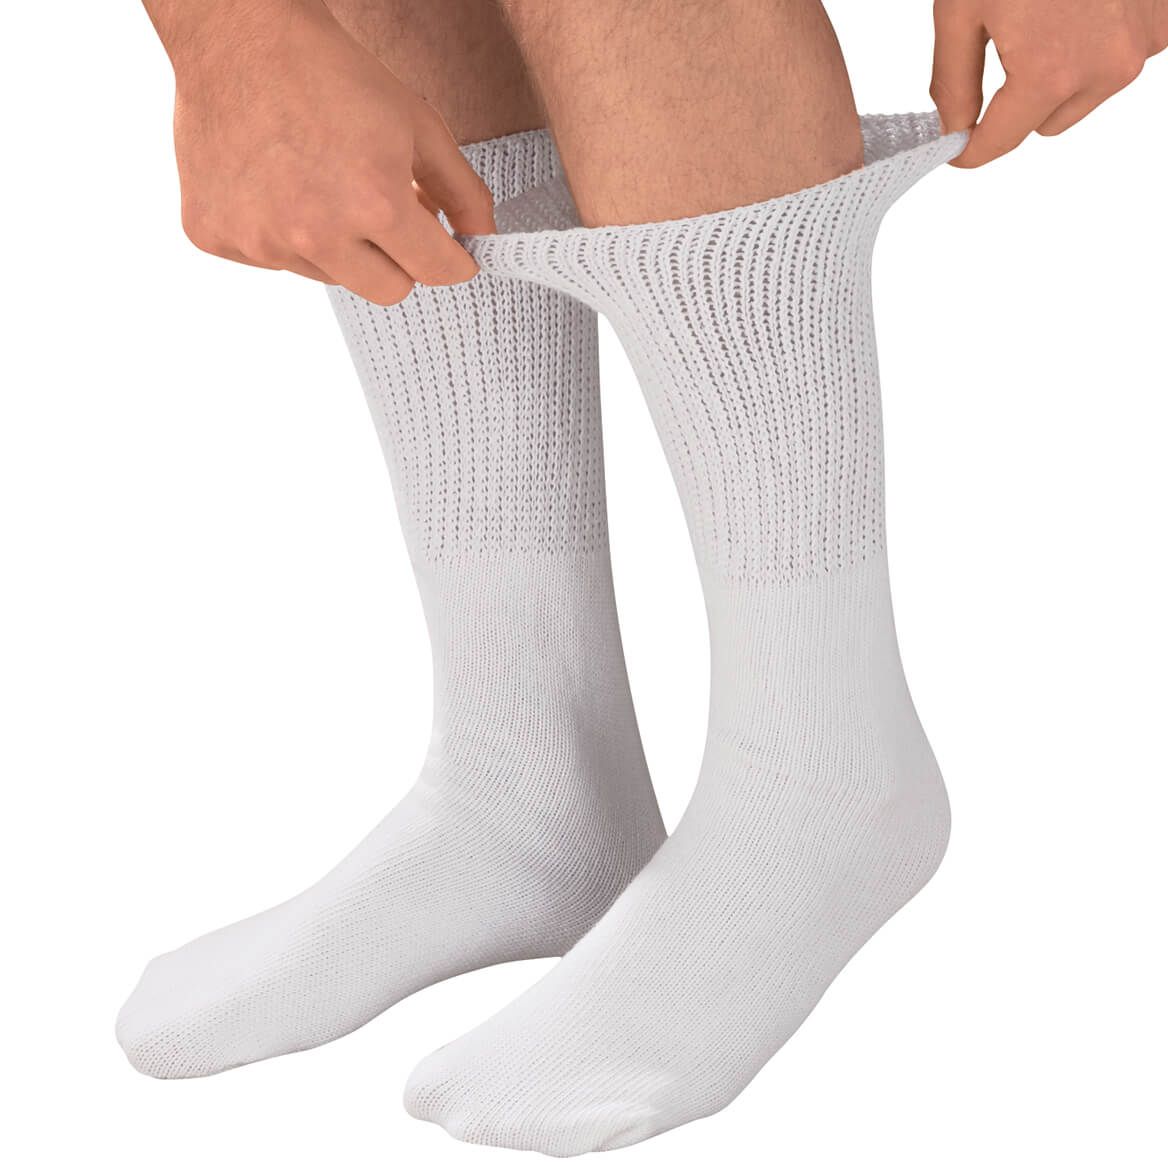 Cotton Diabetic Socks